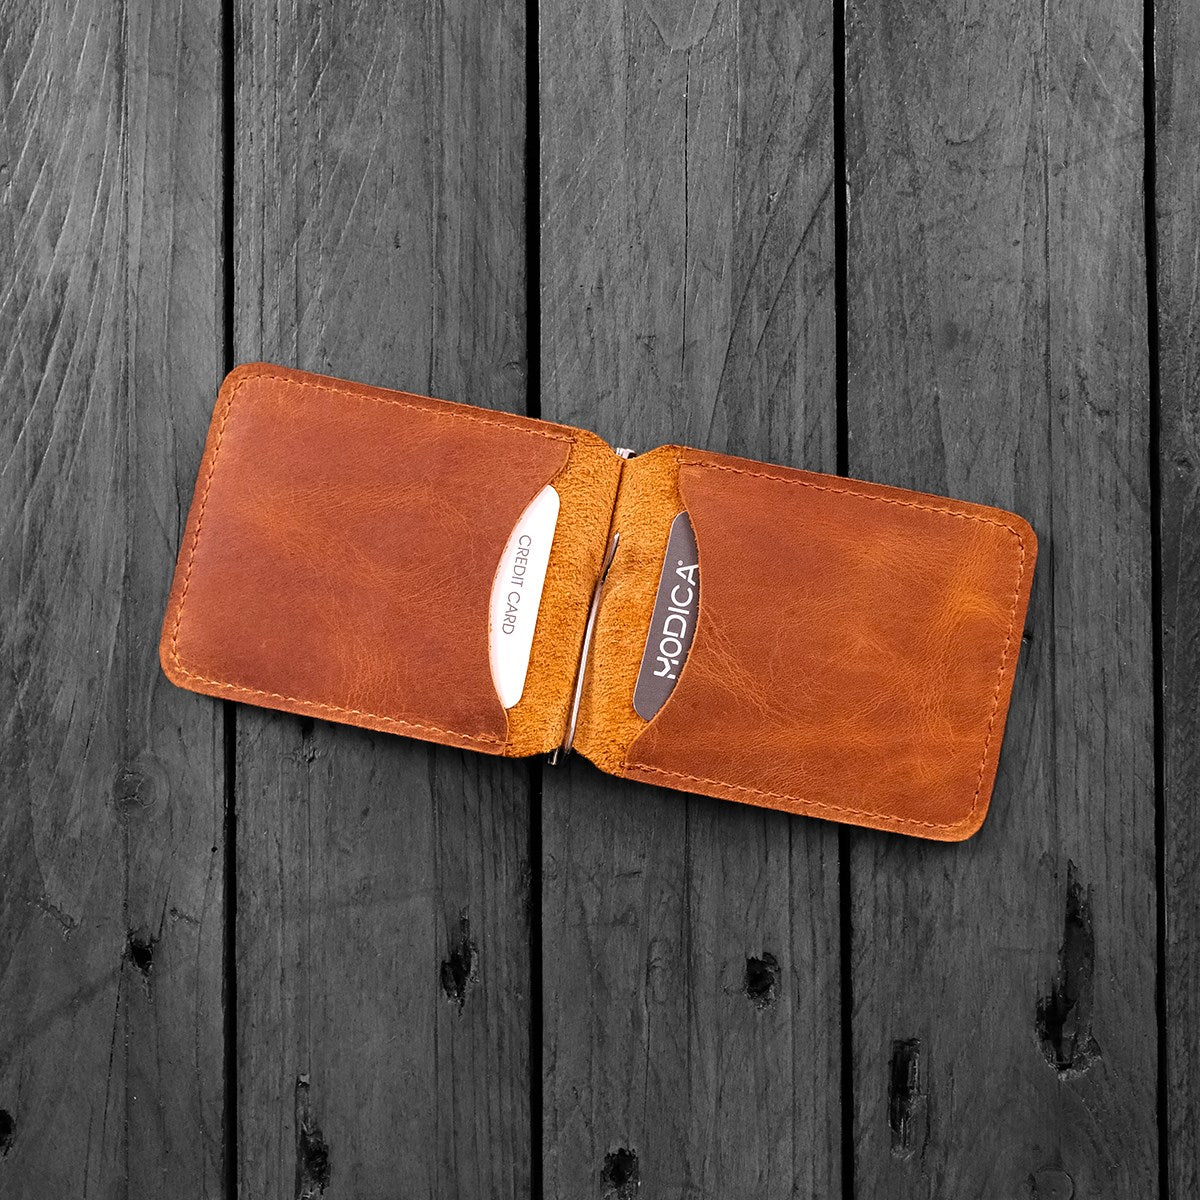 Hodica Larga - Genuine Leather Natural Money Clip Wallet